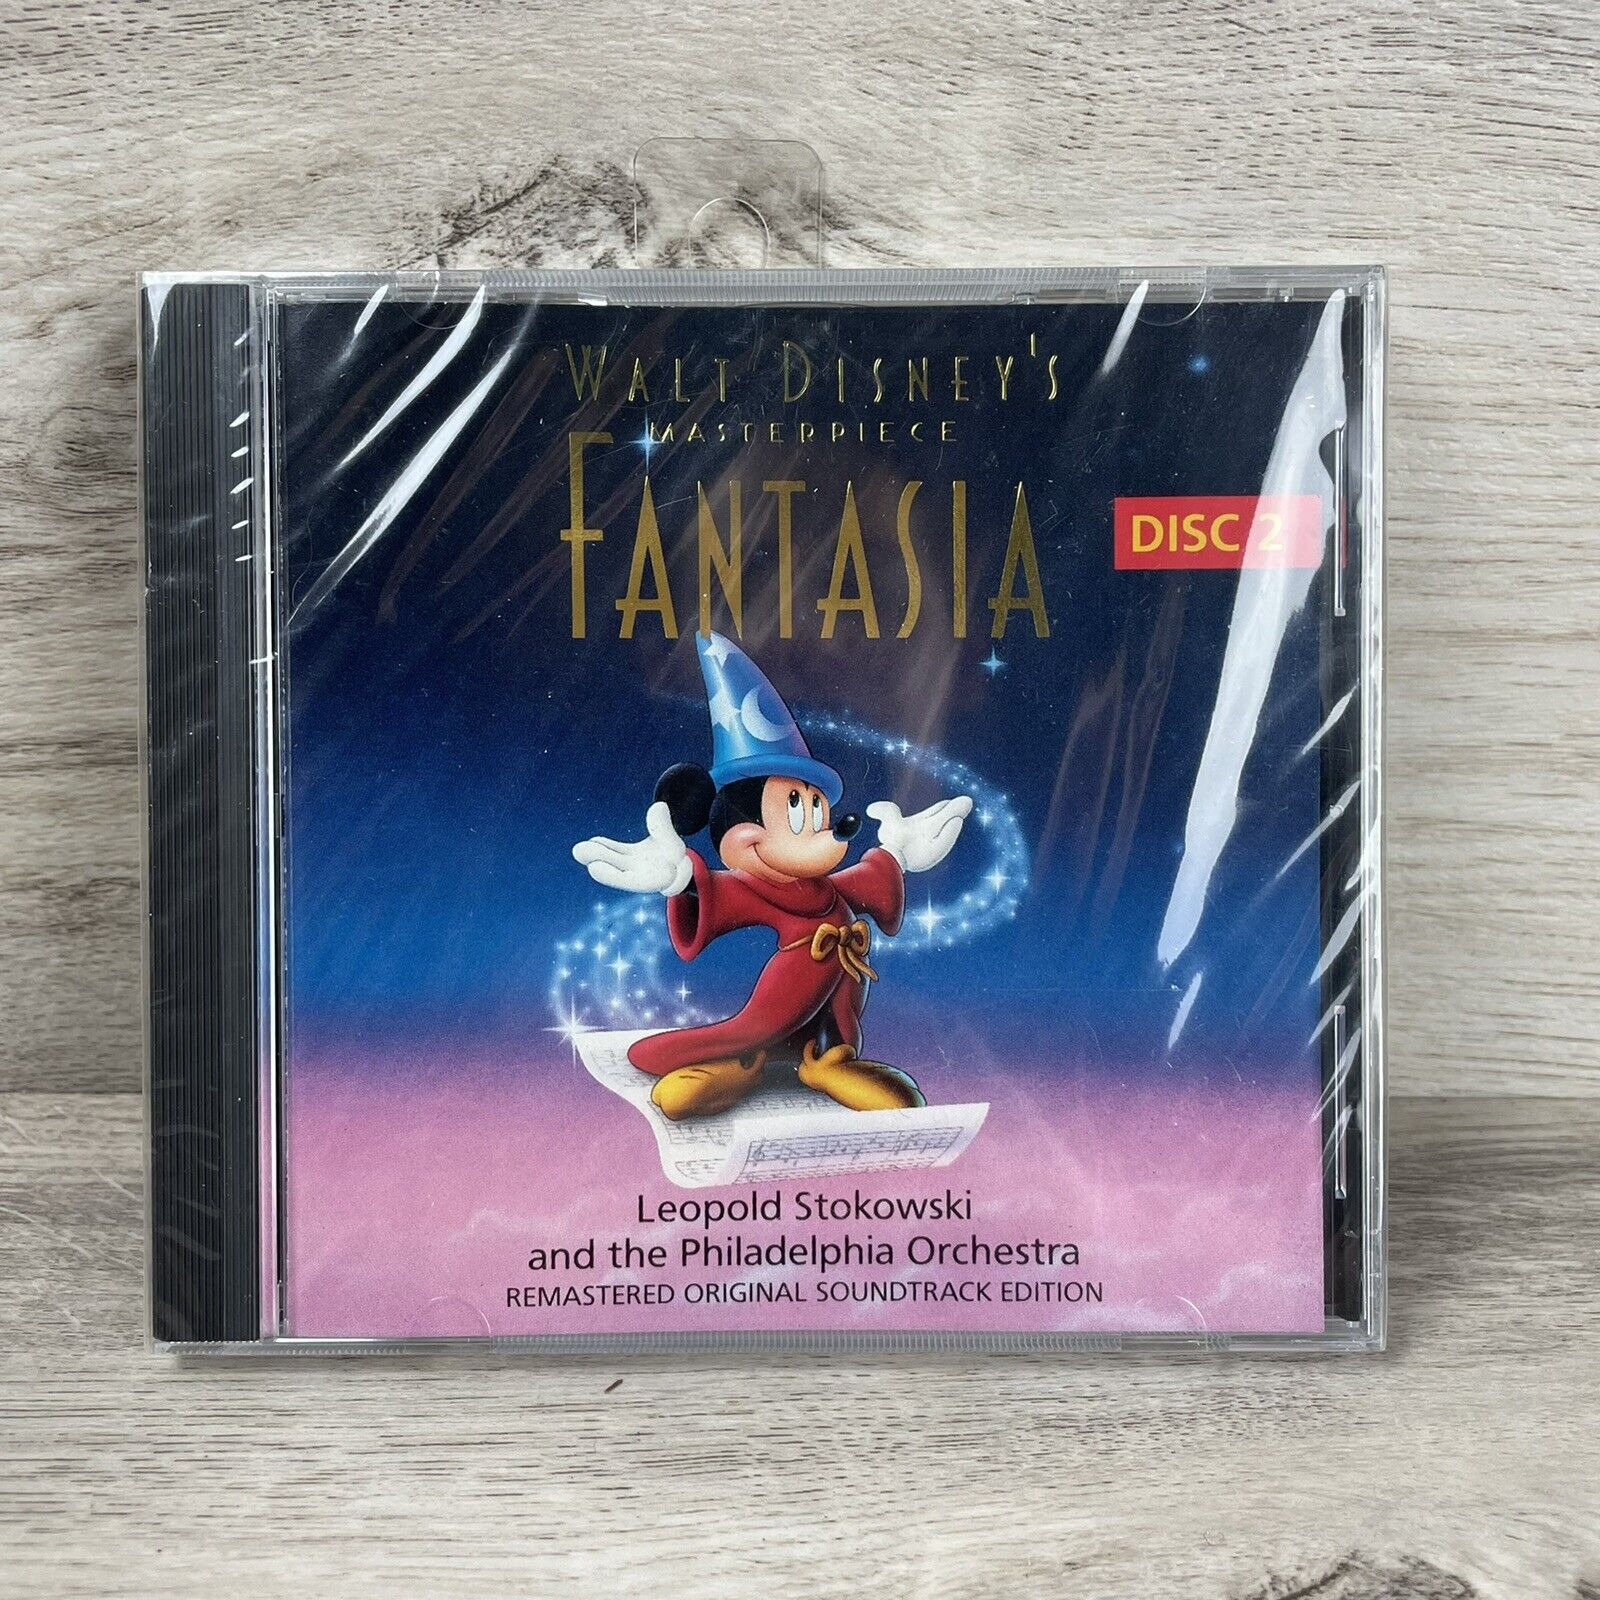 1990 NEW Walt Disney's Fantasia Disc 2 - Remastered Original Soundtrack Edition